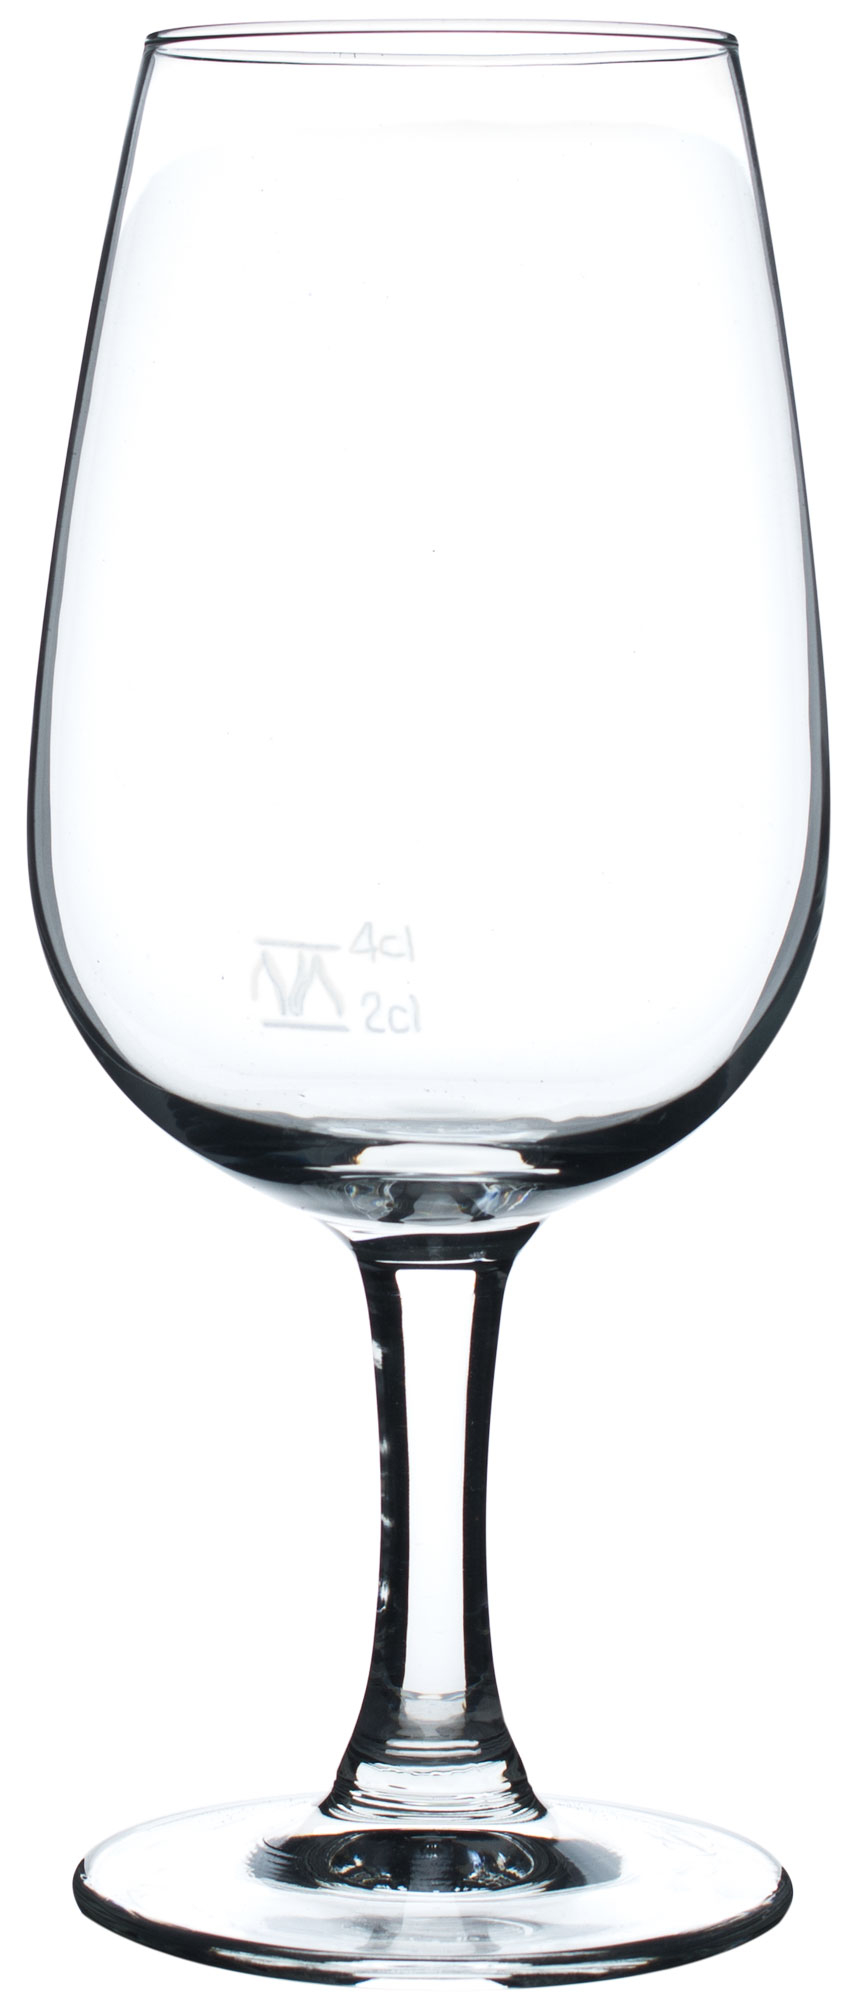 Tastingglass, Plaza Royal Leerdam - 230ml, 2+4cl calibration mark (6 pcs.)